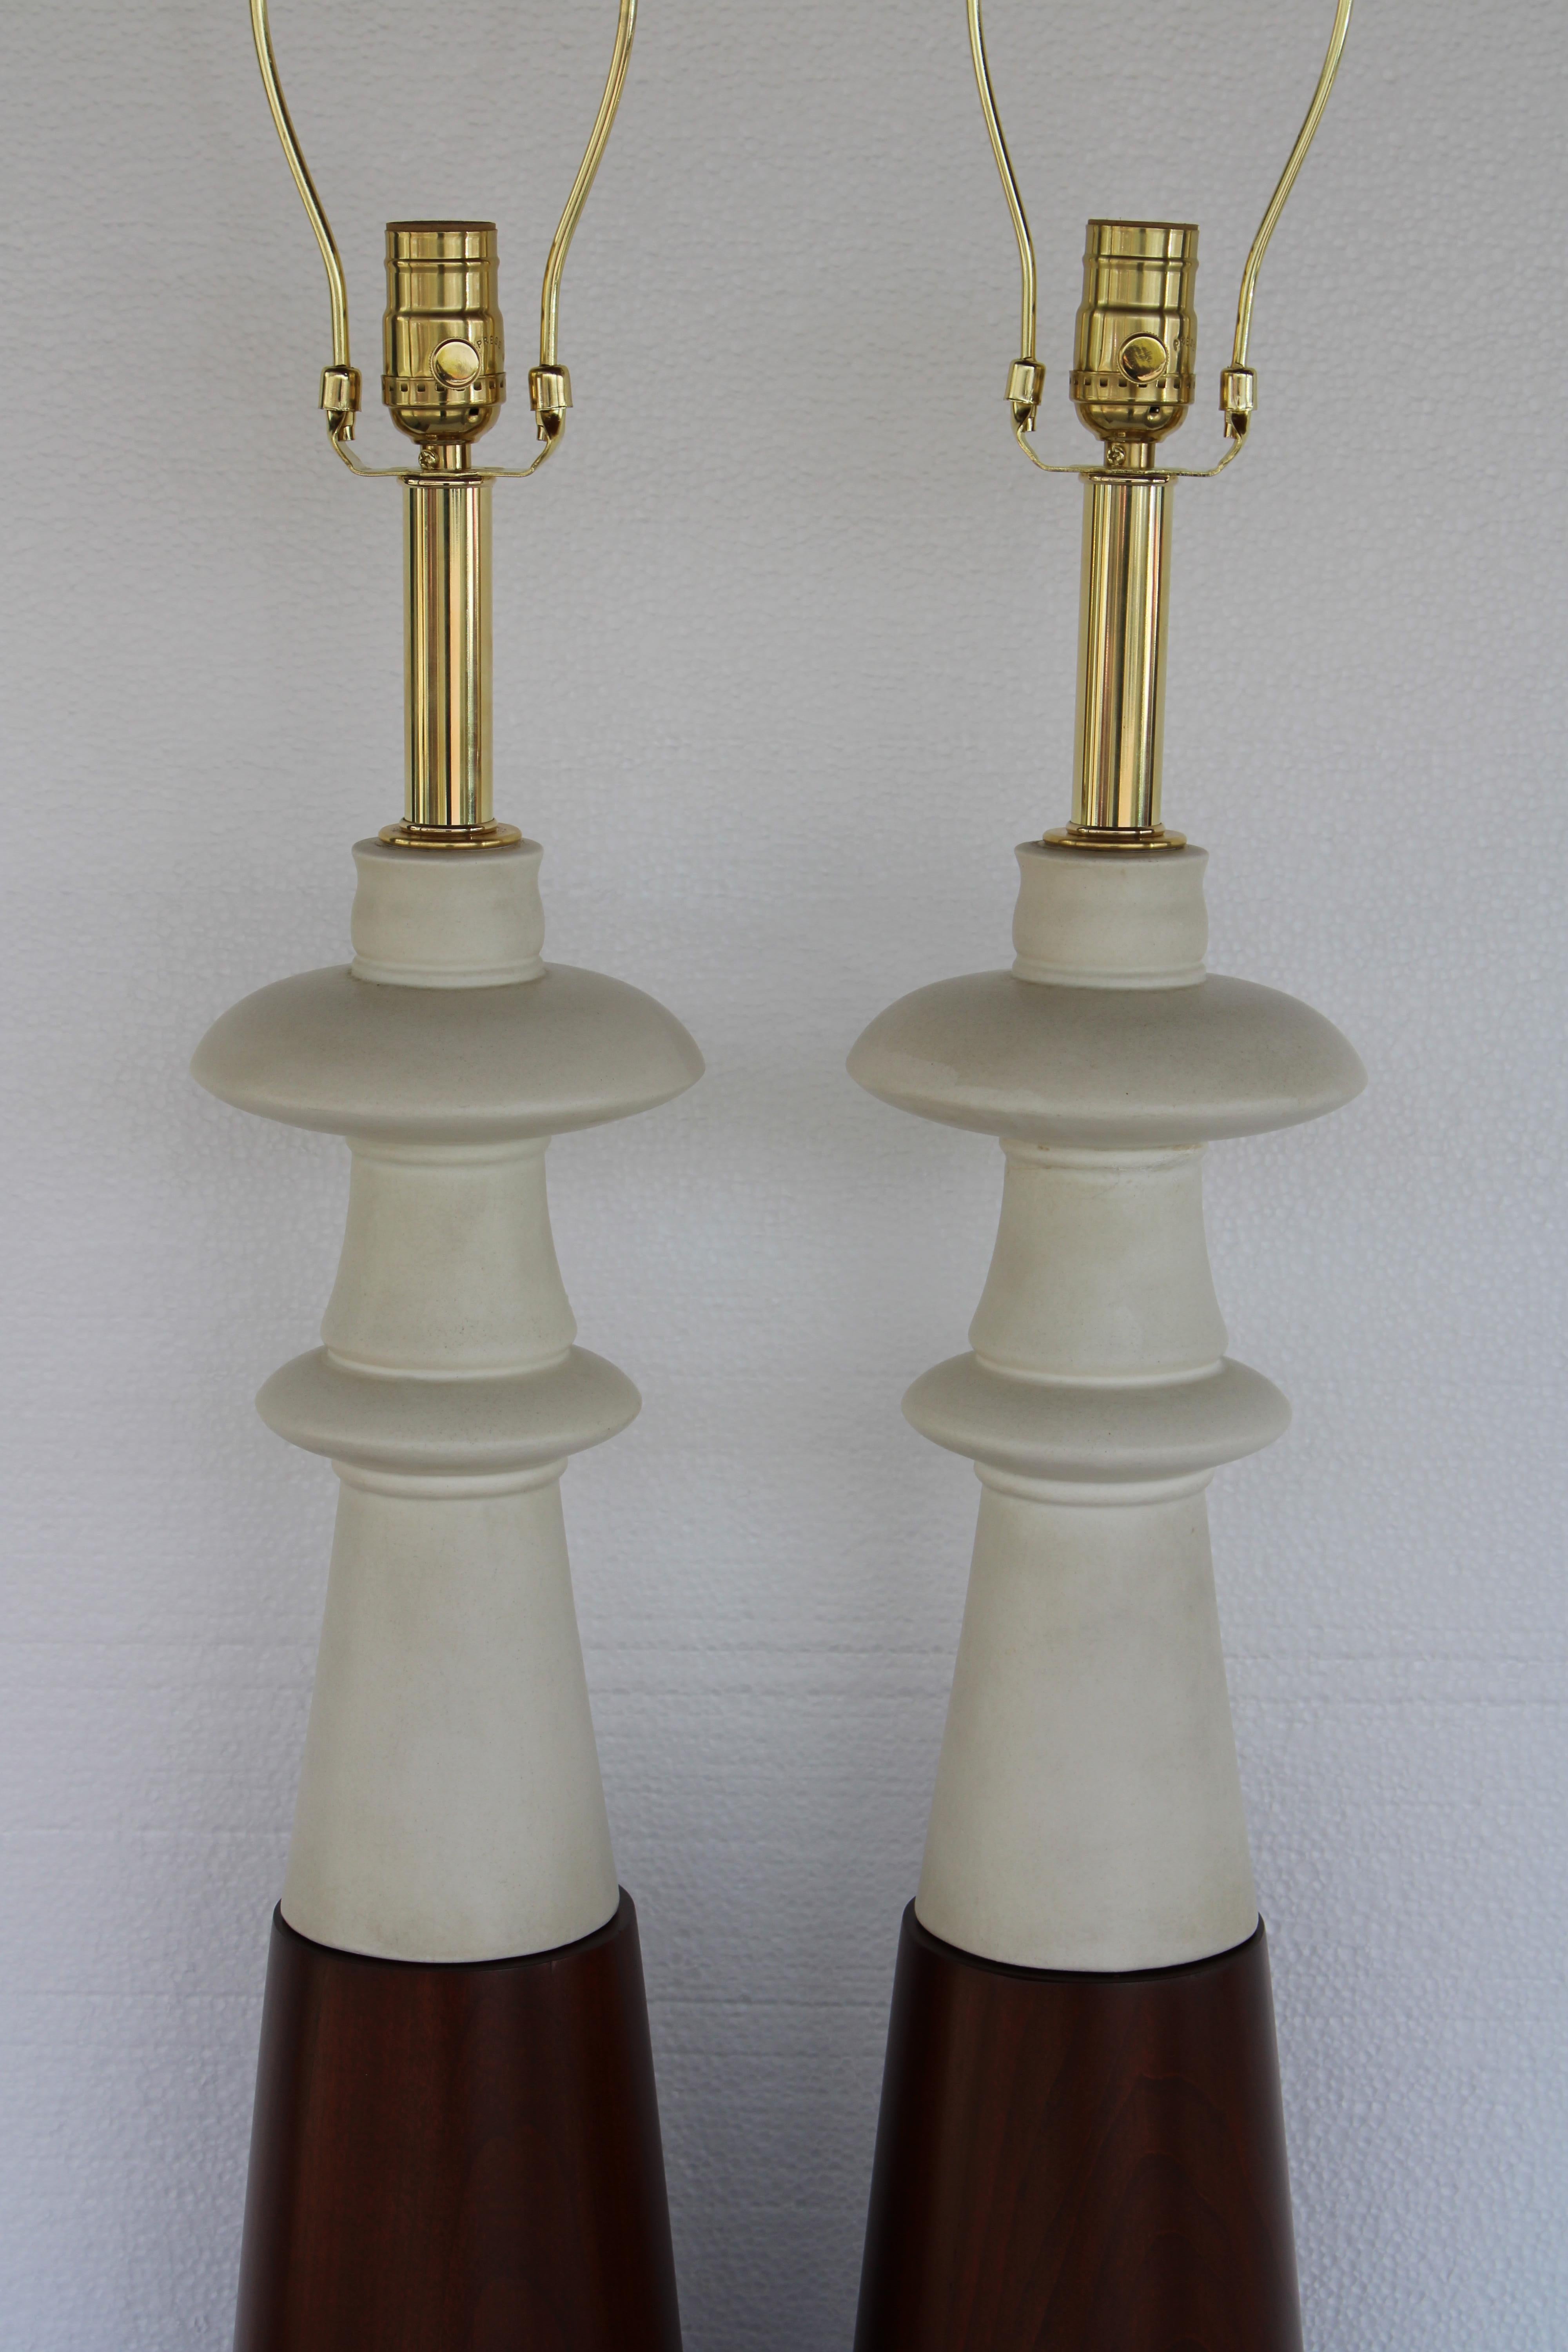 Pair of ceramic and wood table lamps. Lamps measure 26.5